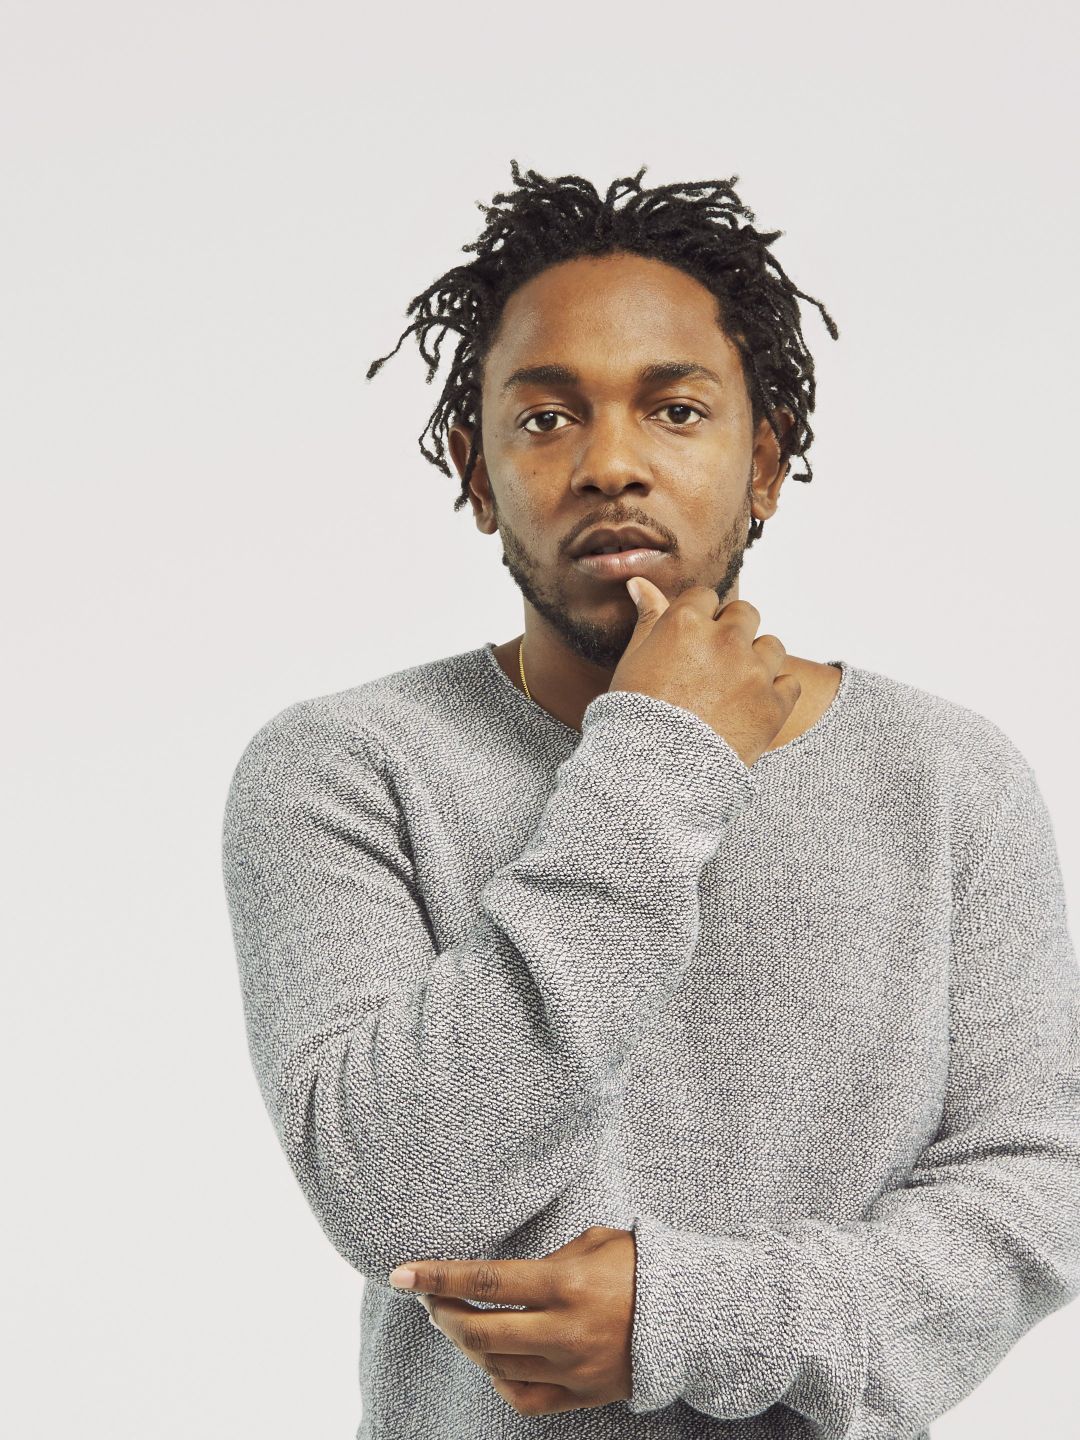 Kendrick Lamar personal life